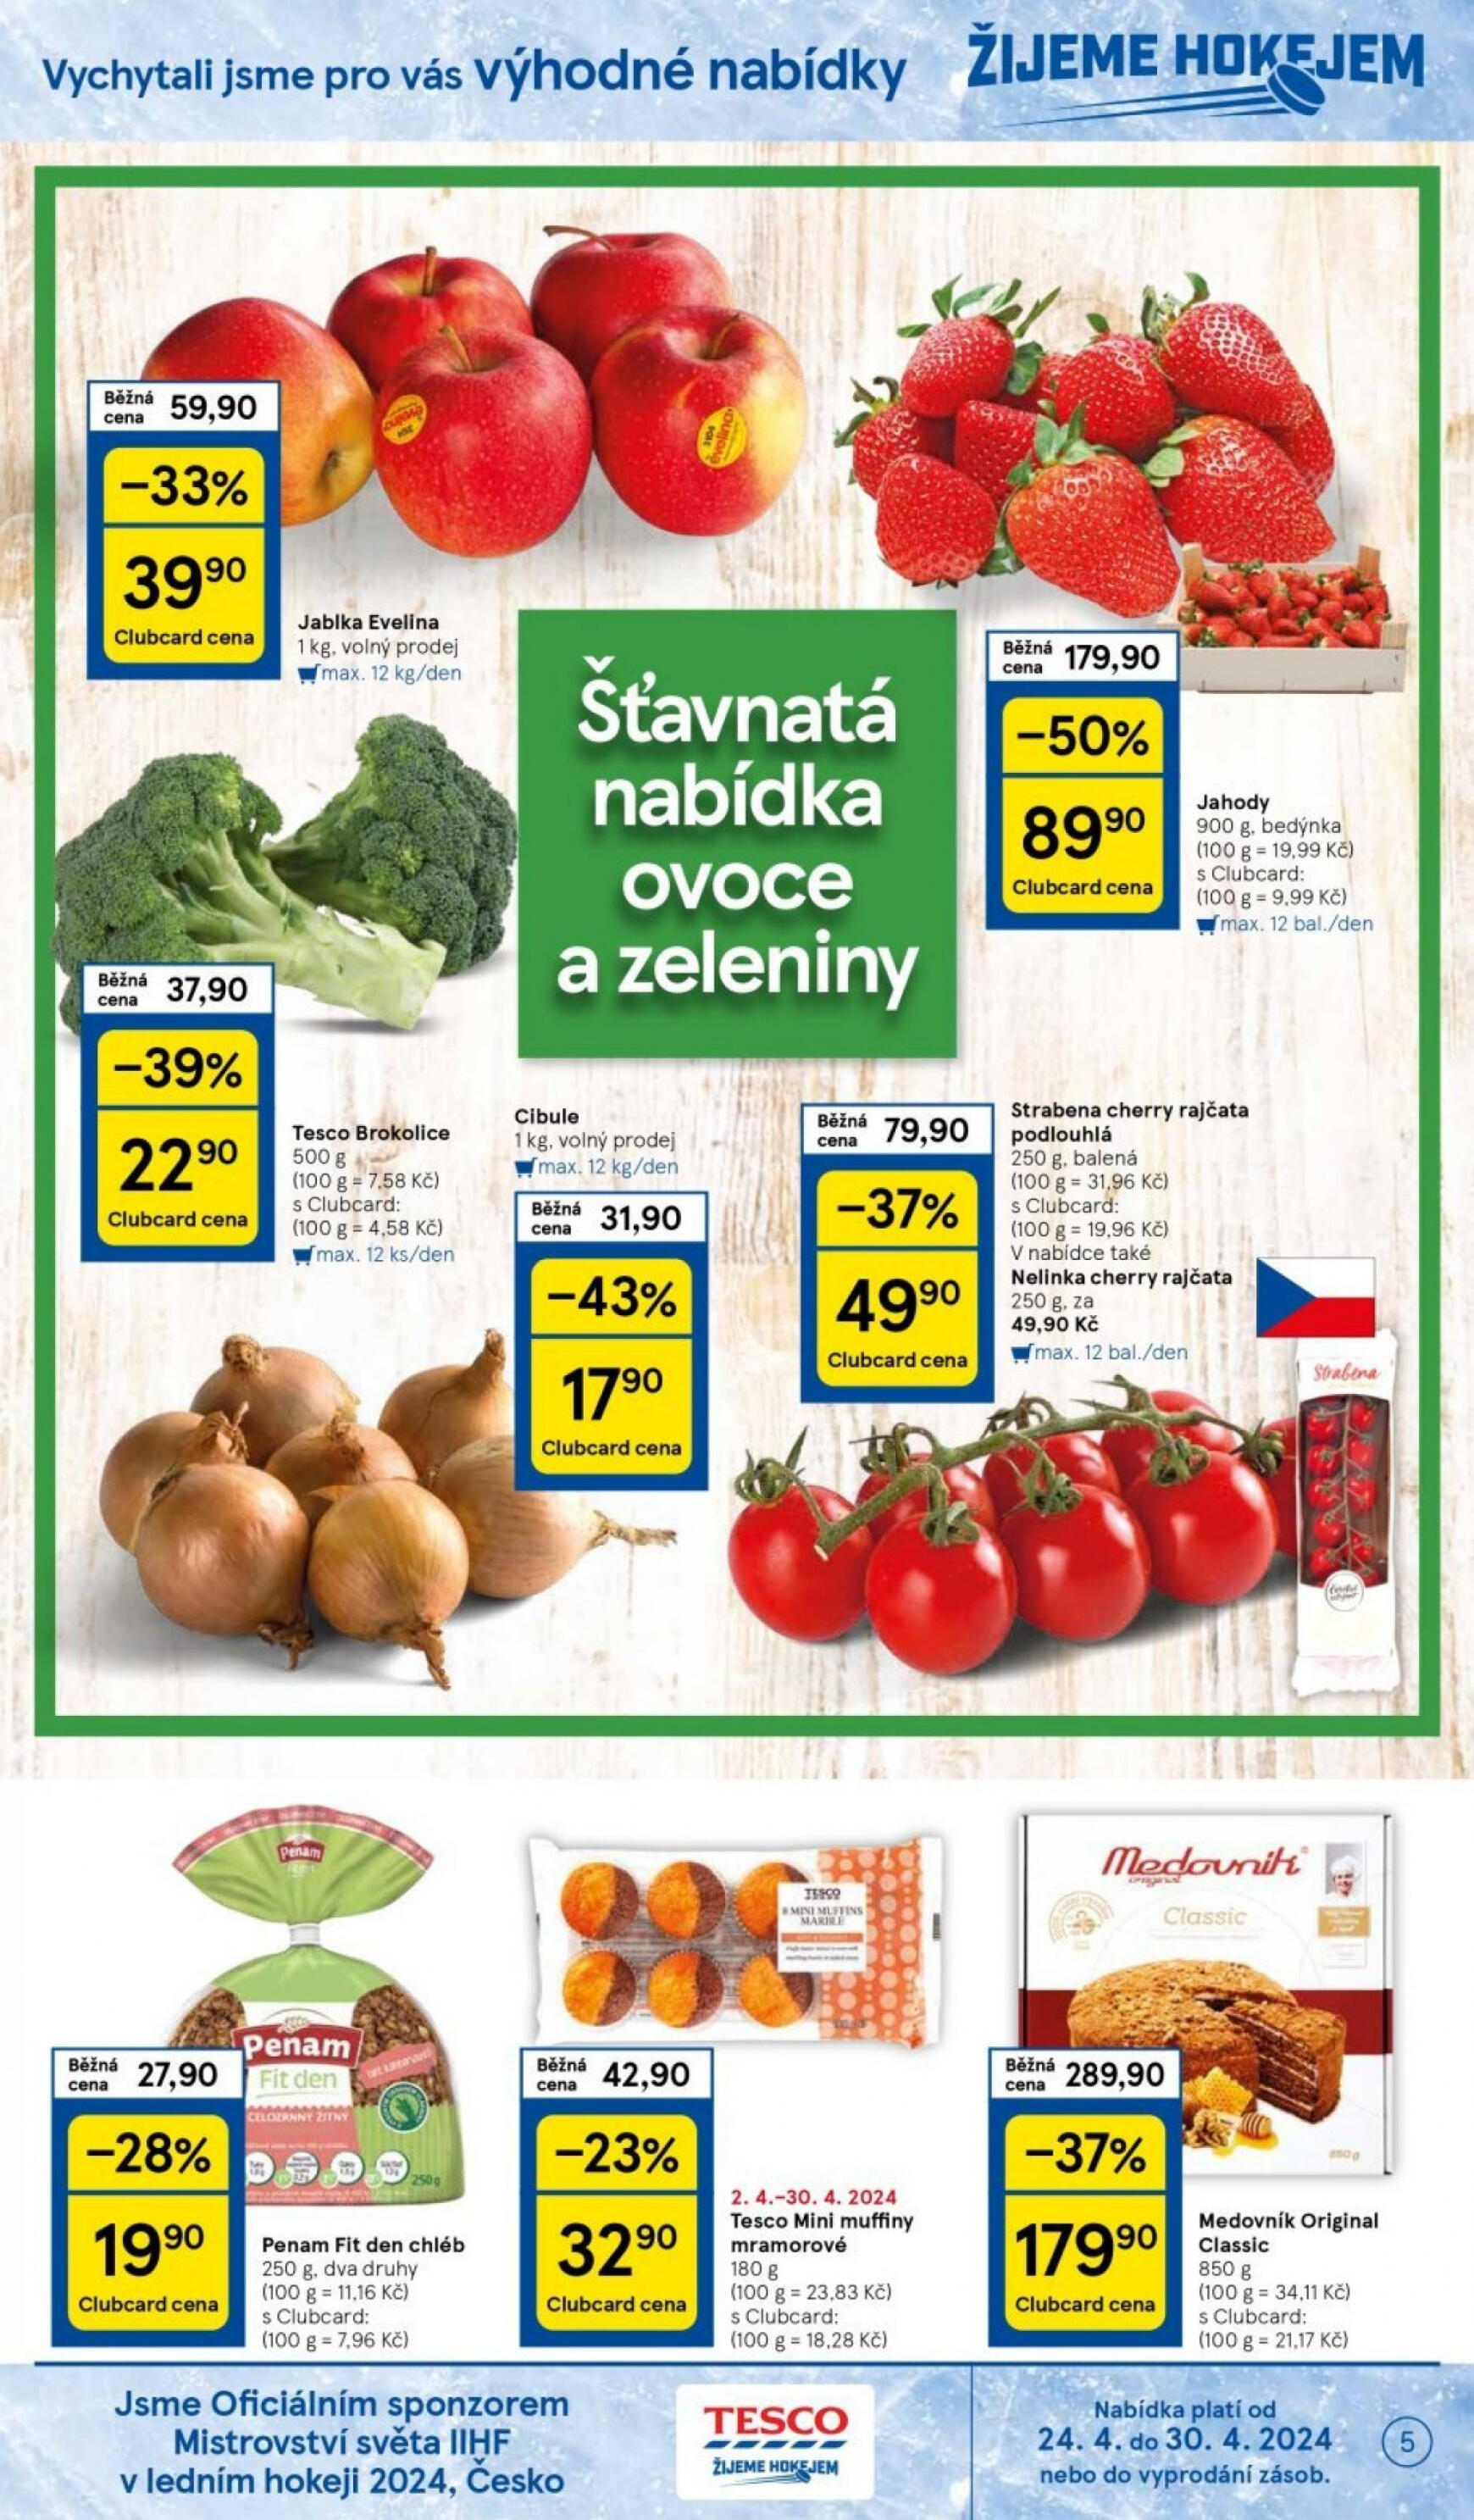 tesco - Leták Tesco supermarket aktuální 24.04. - 30.04. - page: 5